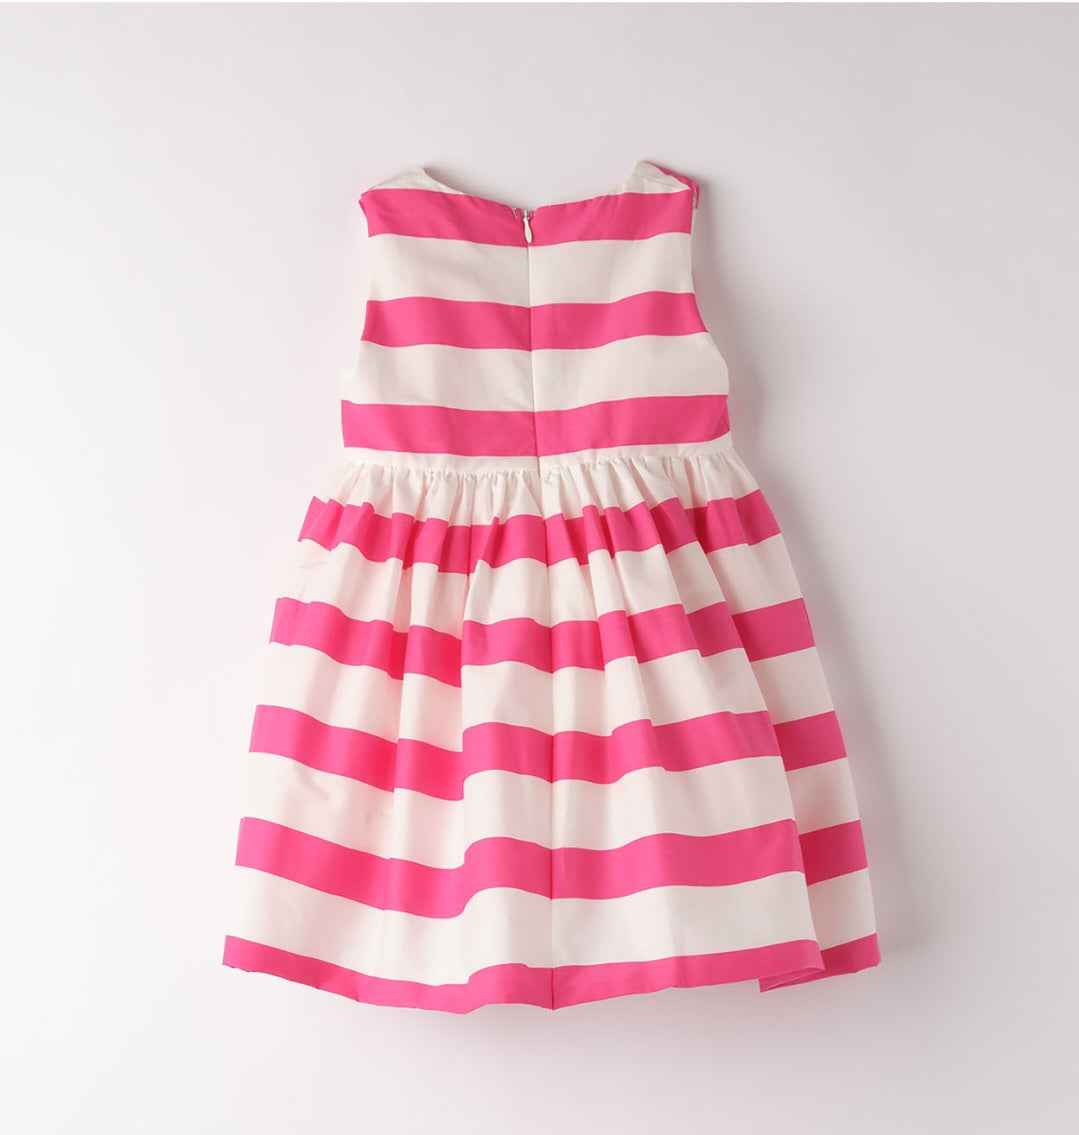 Cream and Pink Summer Dress